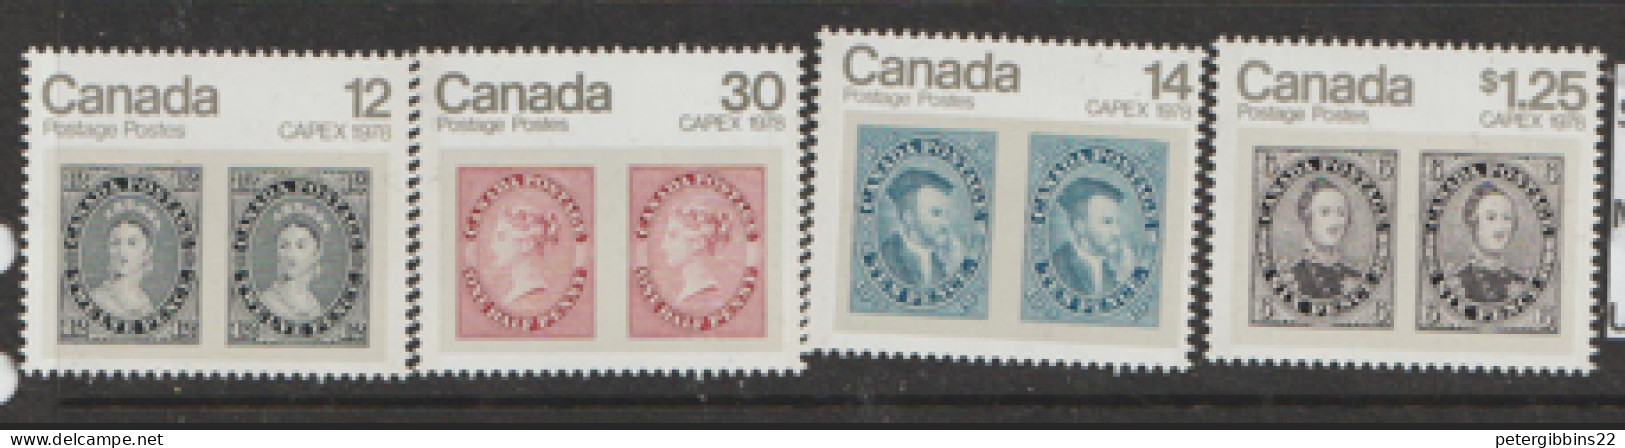 Canada 1978  SG 907-17  CAPEX  78   Unmounted Mint - Unused Stamps